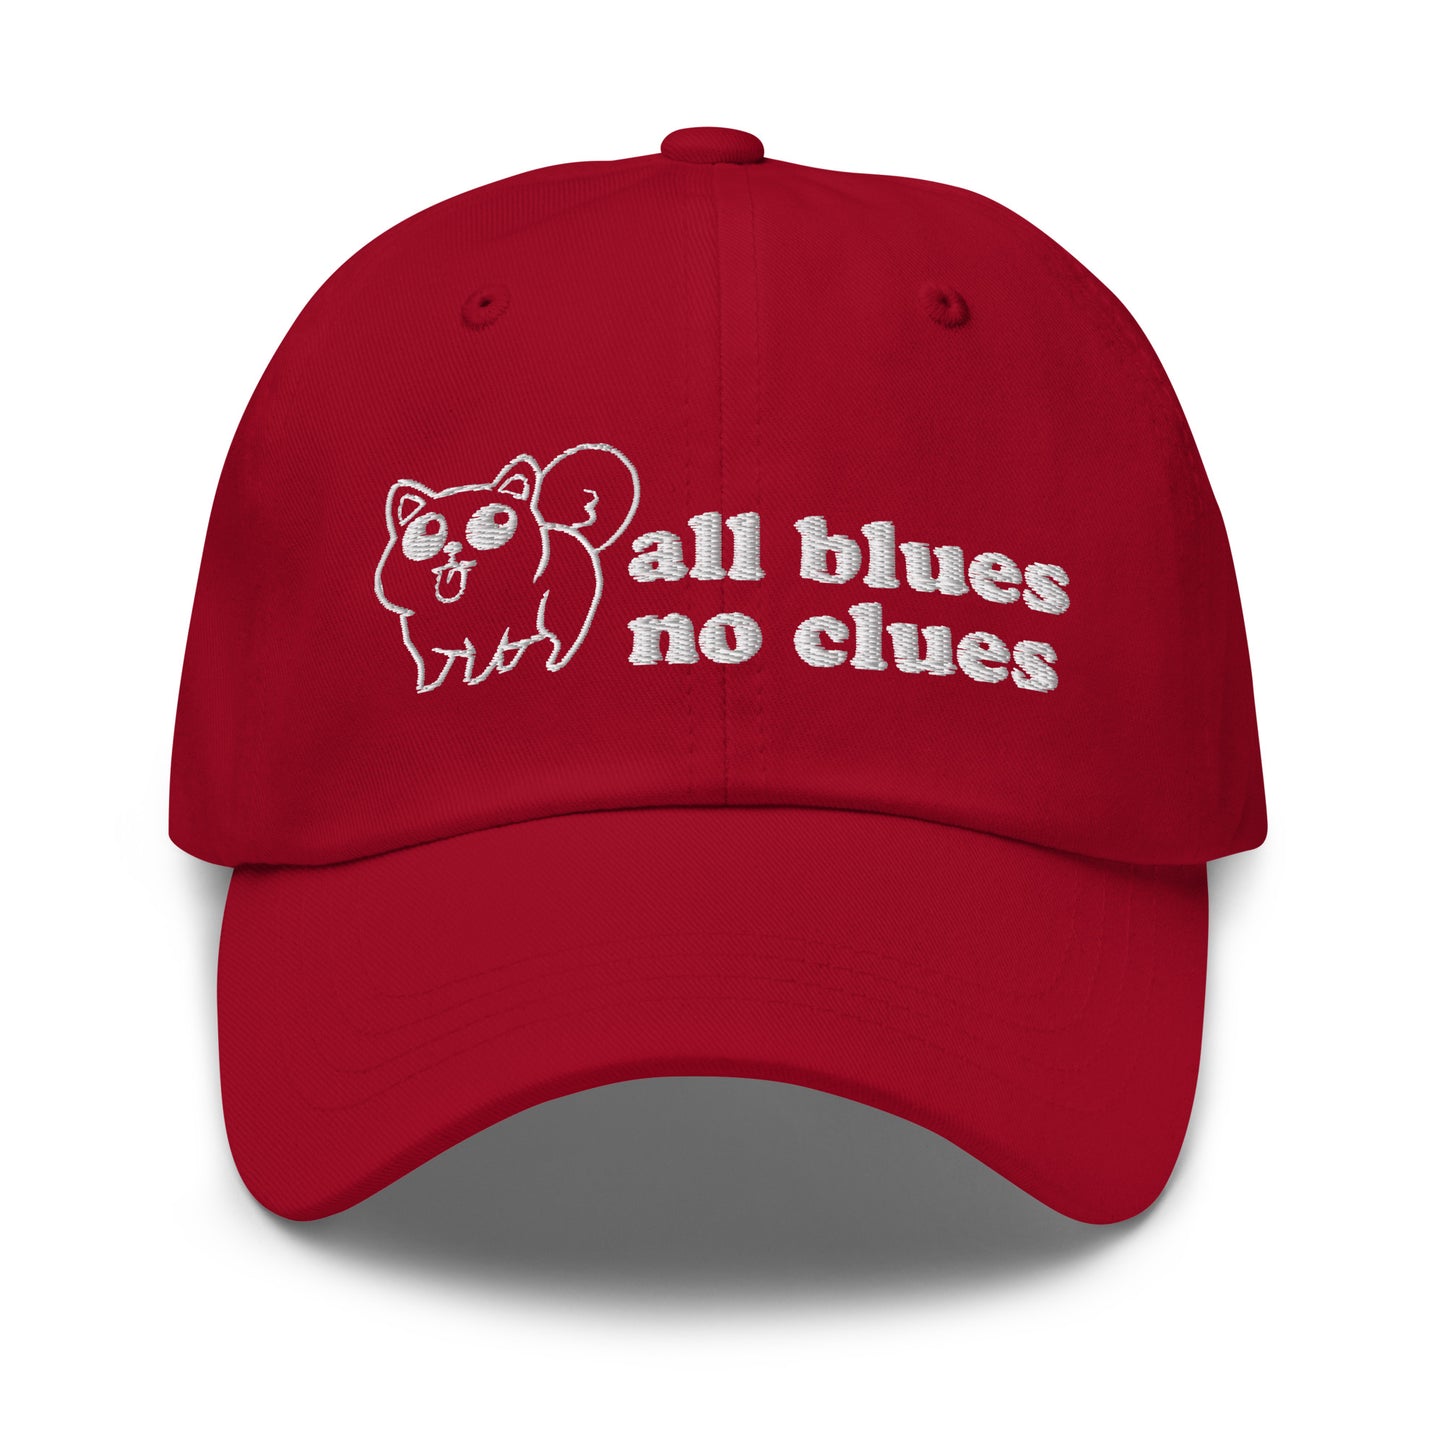 All Blues hat